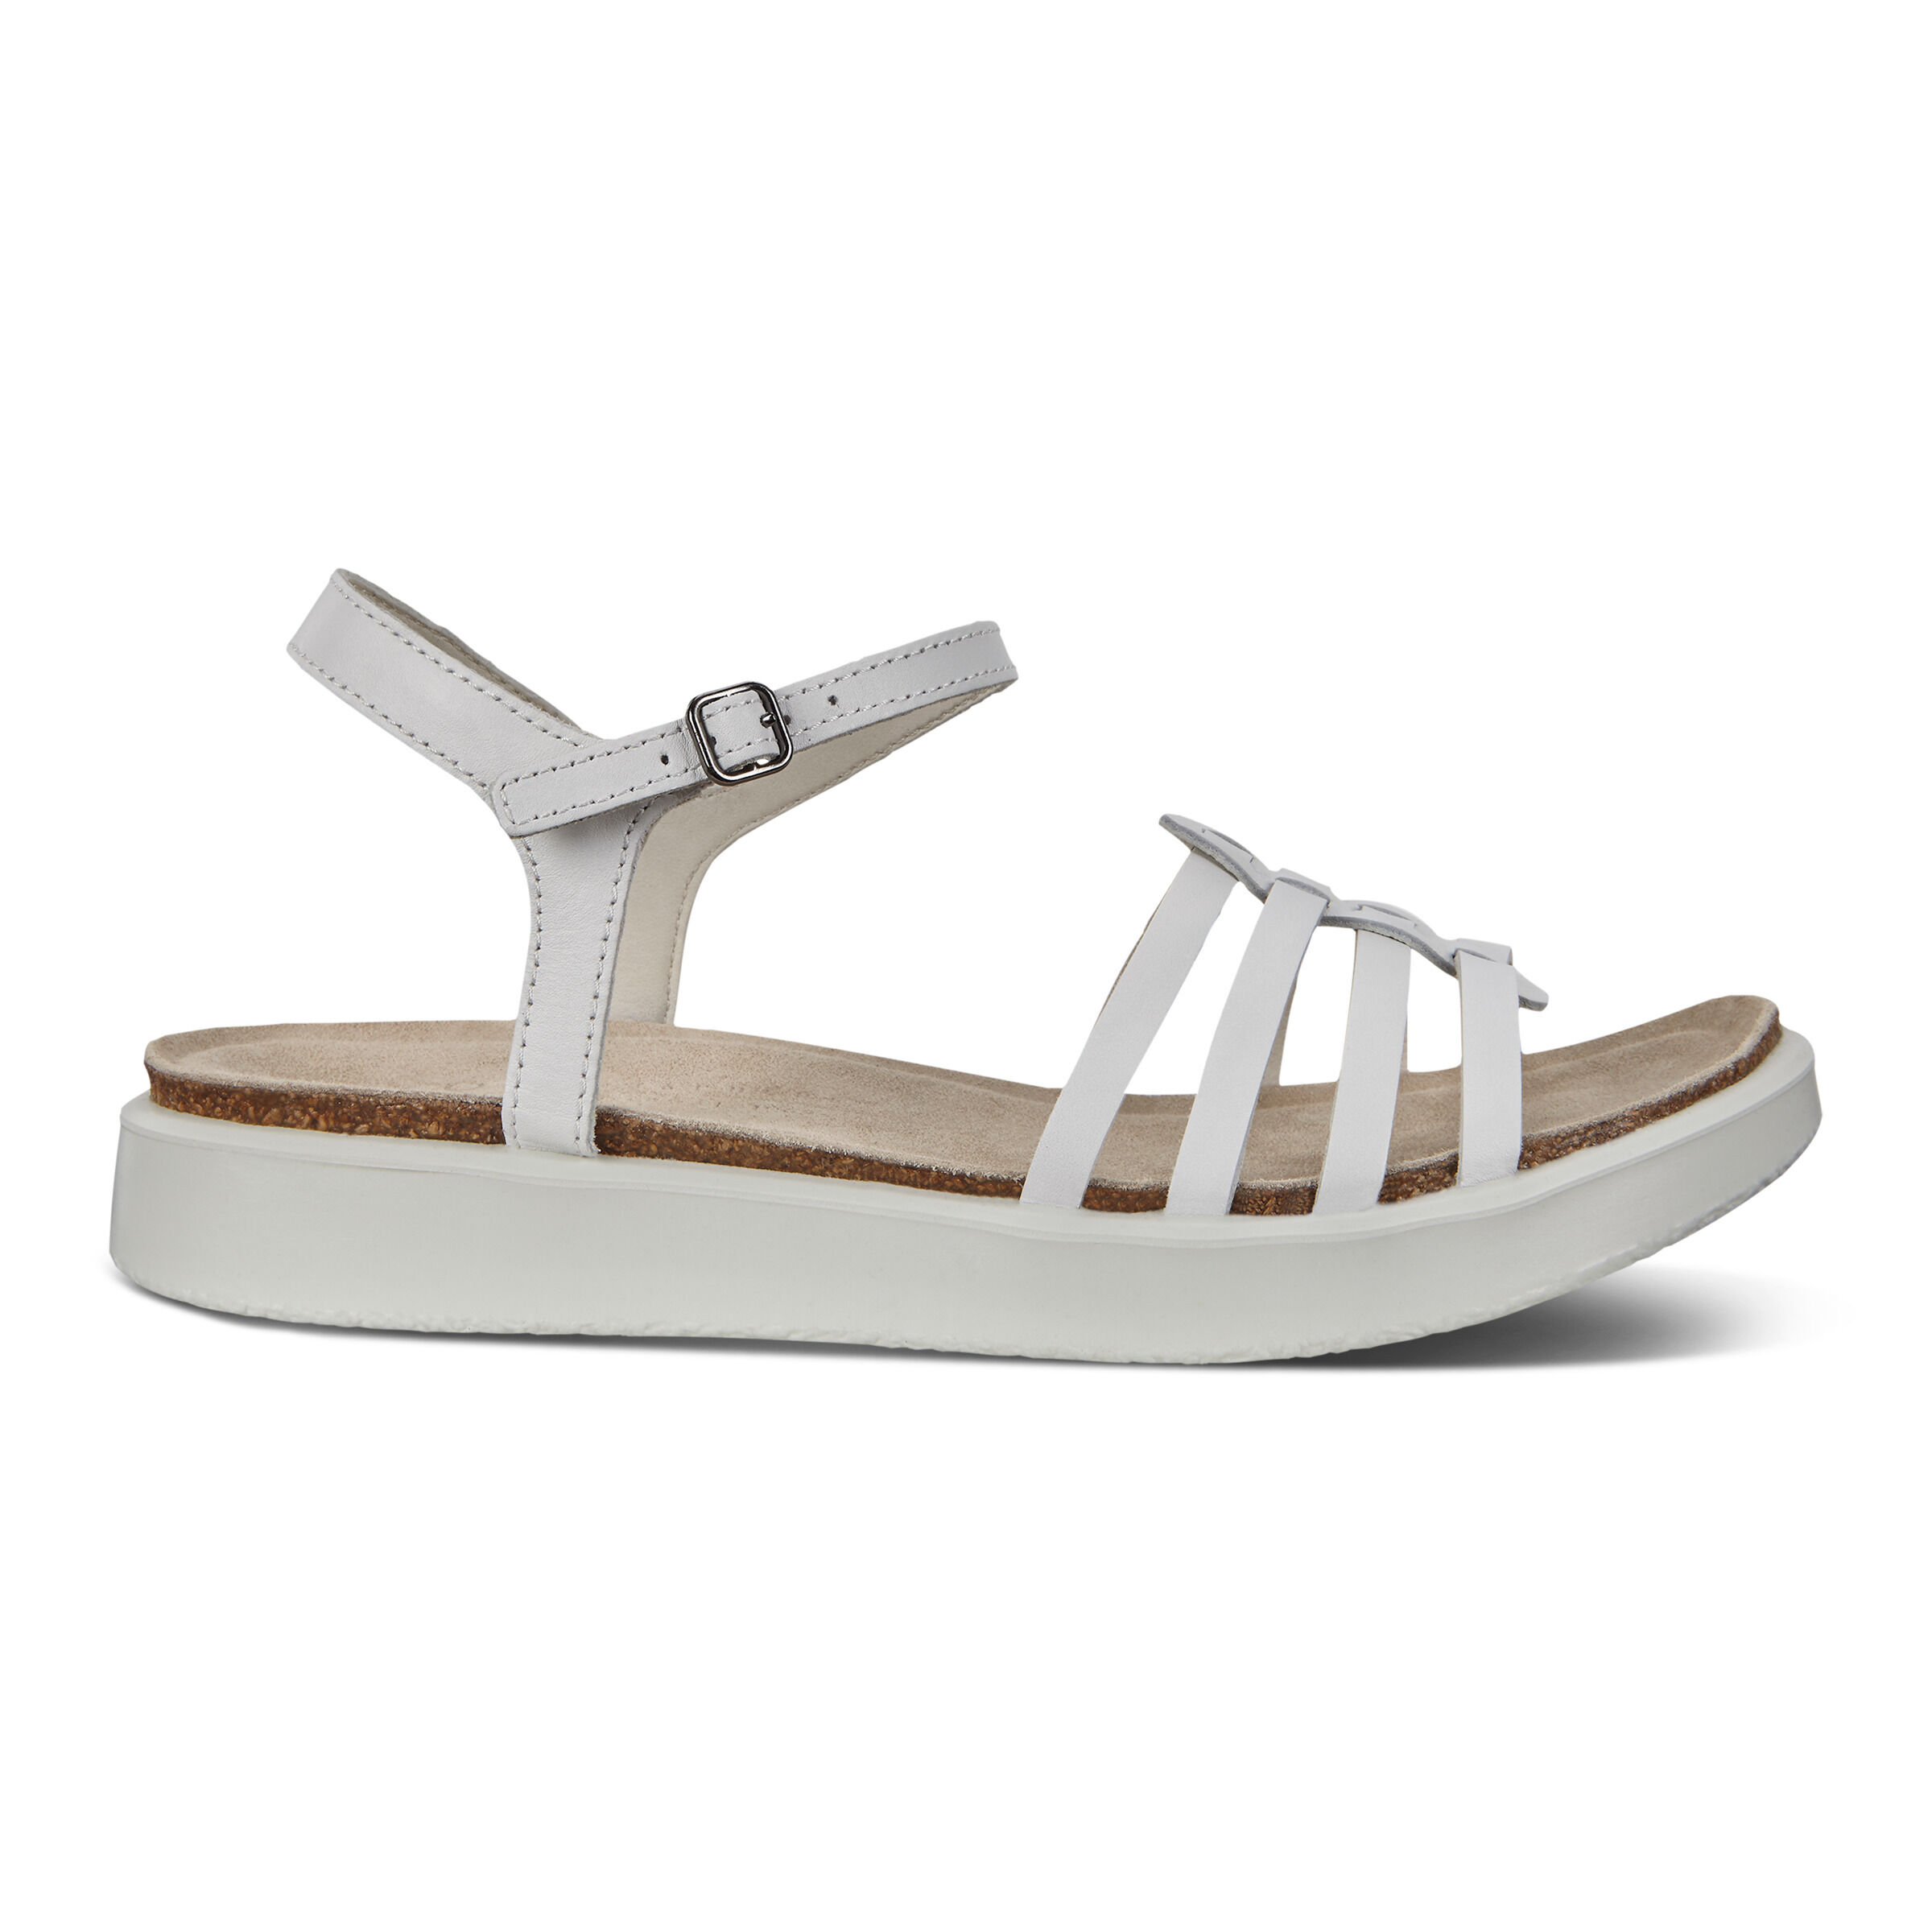 white sandals size 10